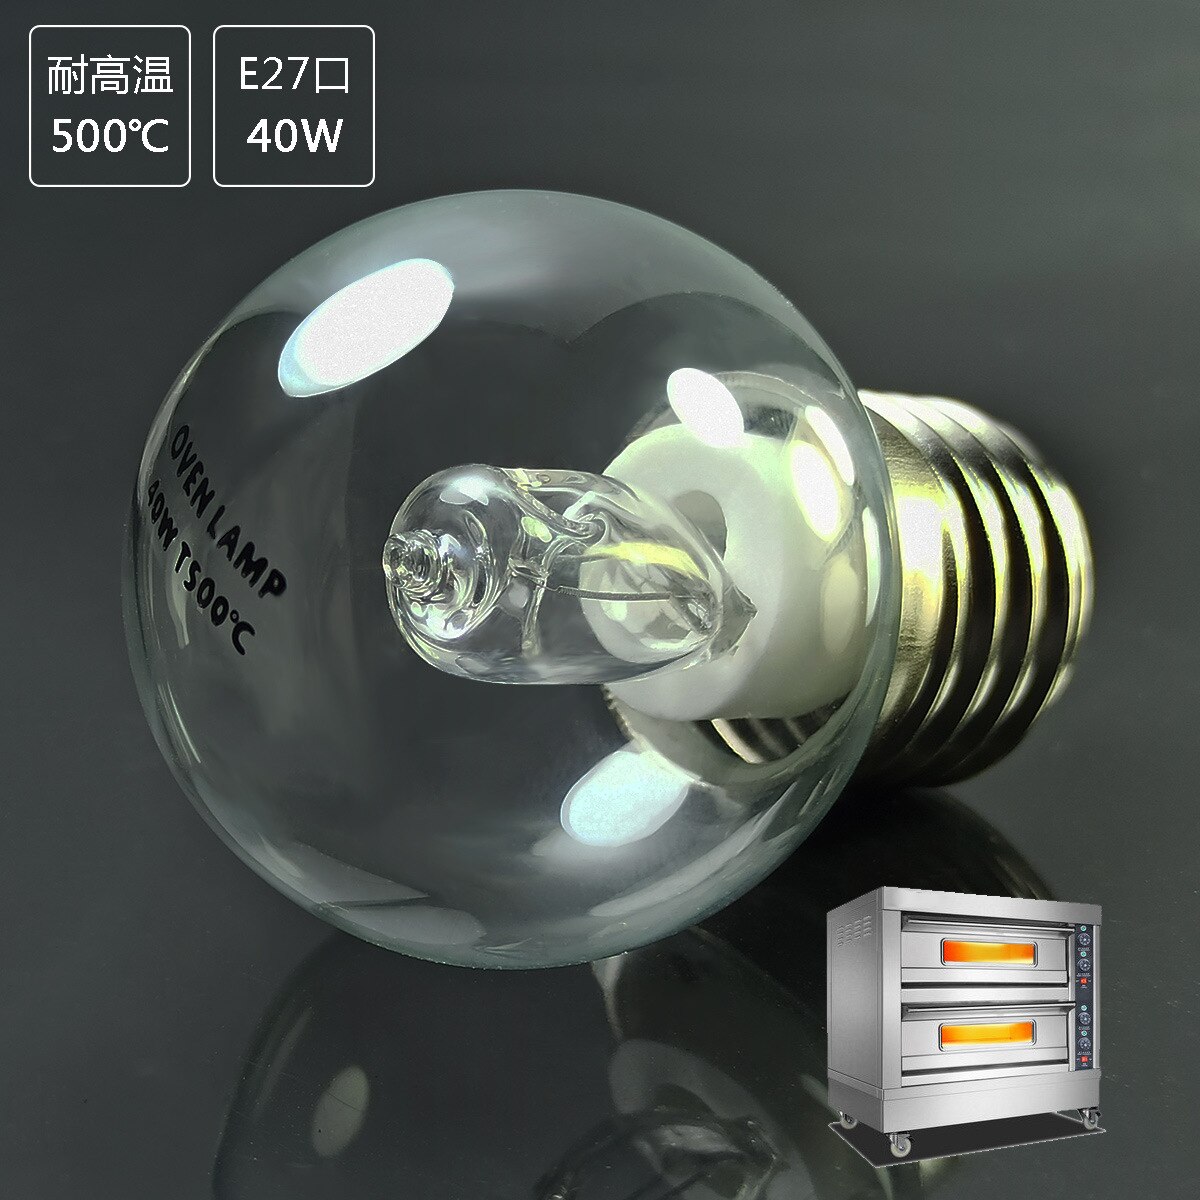 Hoge Temperatuur Bestendig 500 ℃ Lamp Commerciële Gebruik Oven Schat Scherpe Kast Display Vitrinekast Lamp E27 Halo